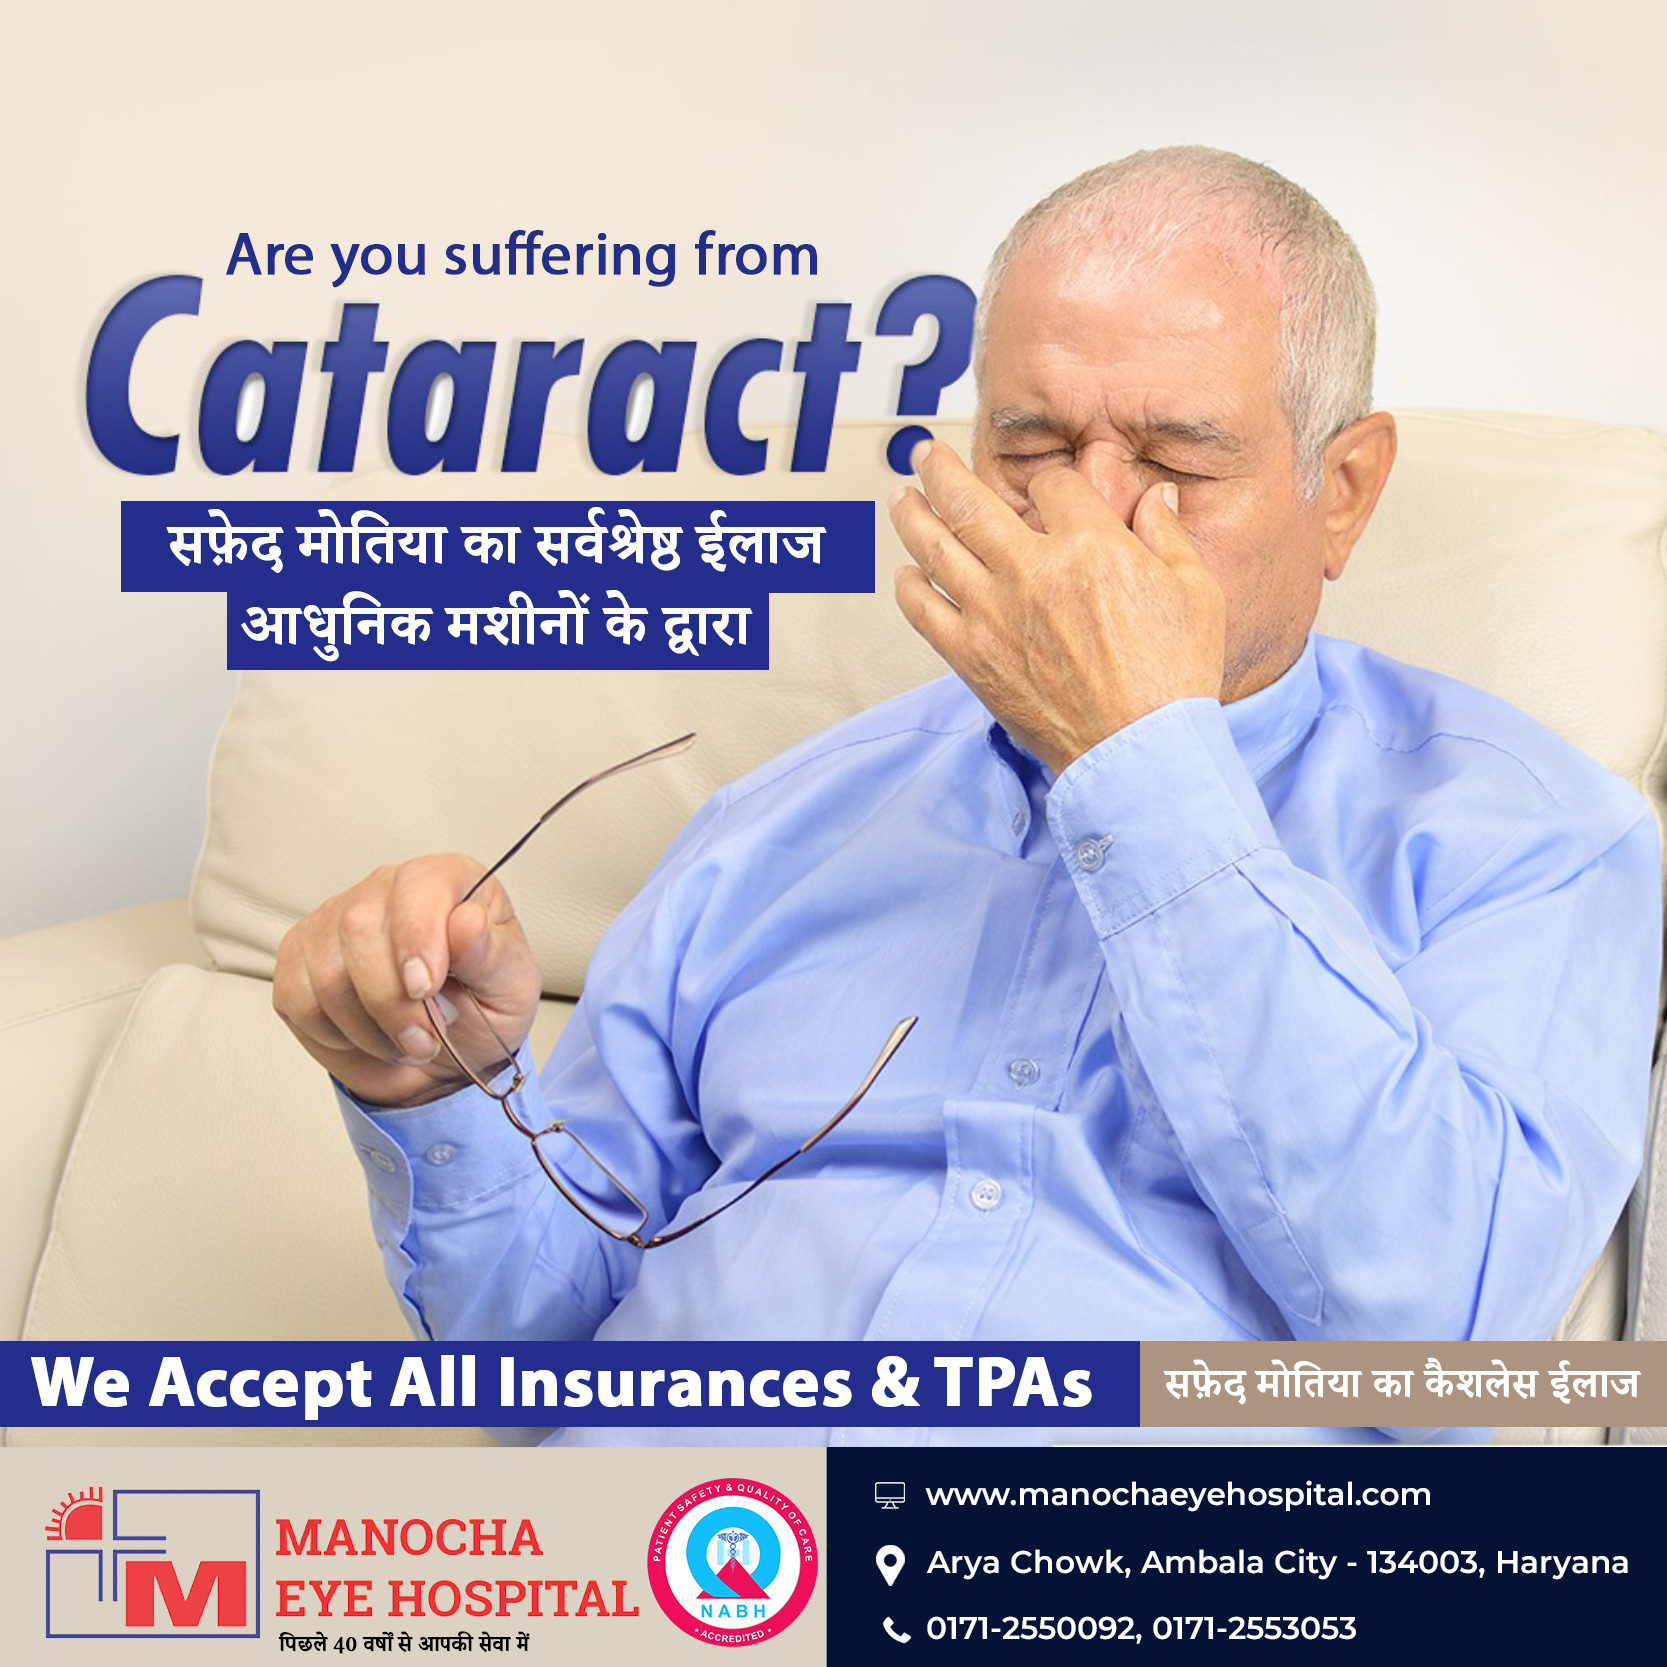 Cataract Surgery by Star Health Insurance in Ambala | Manocha Eye Hospital